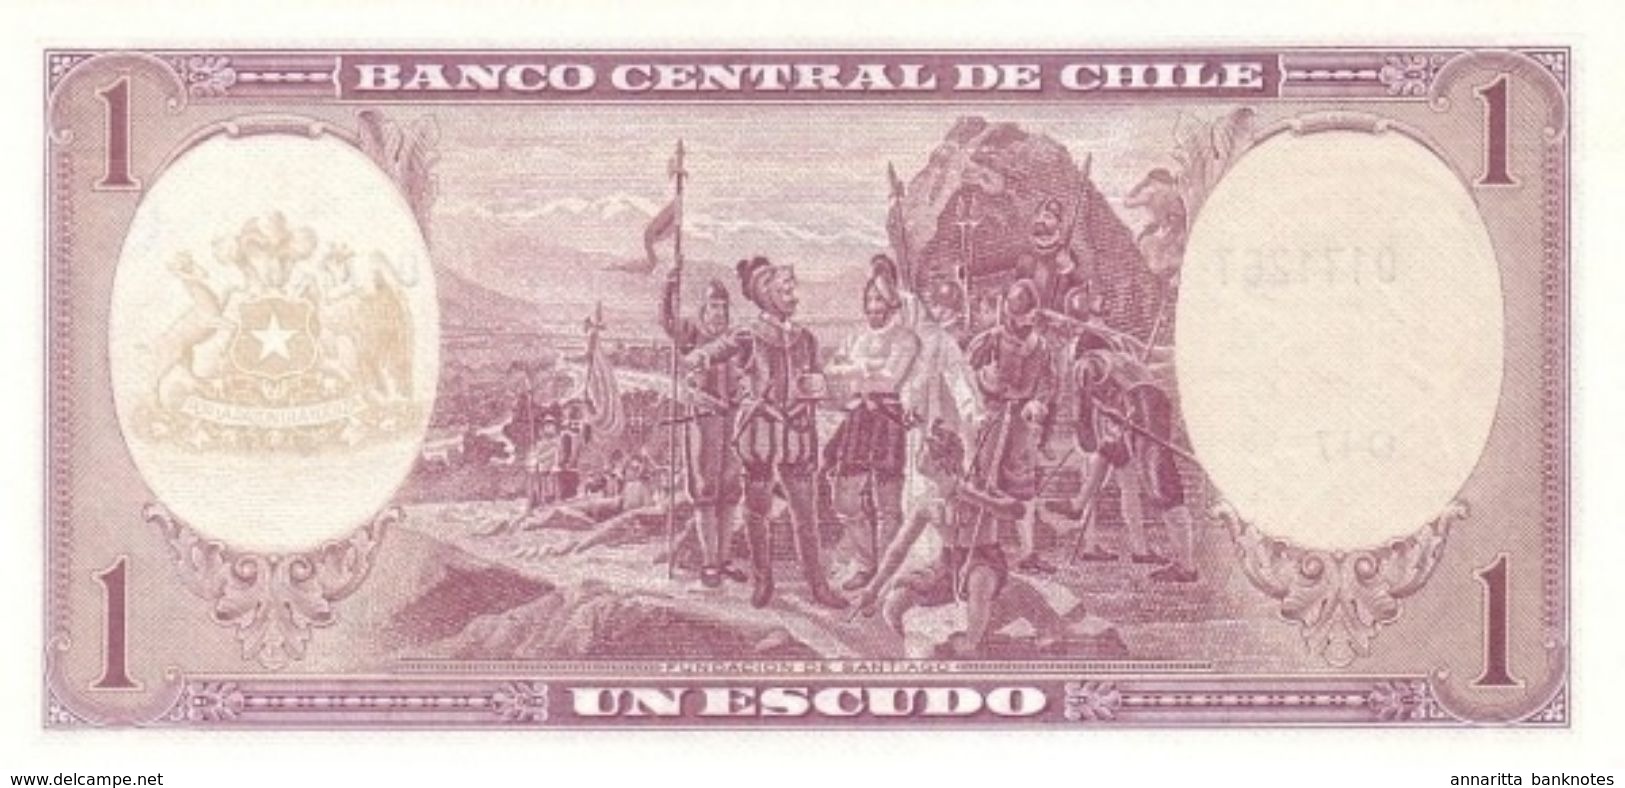 CHILE 1 ESCUDO ND (1964) P-136a UNC SIGN. MASSAD & IBANEZ [CL271a] - Chili